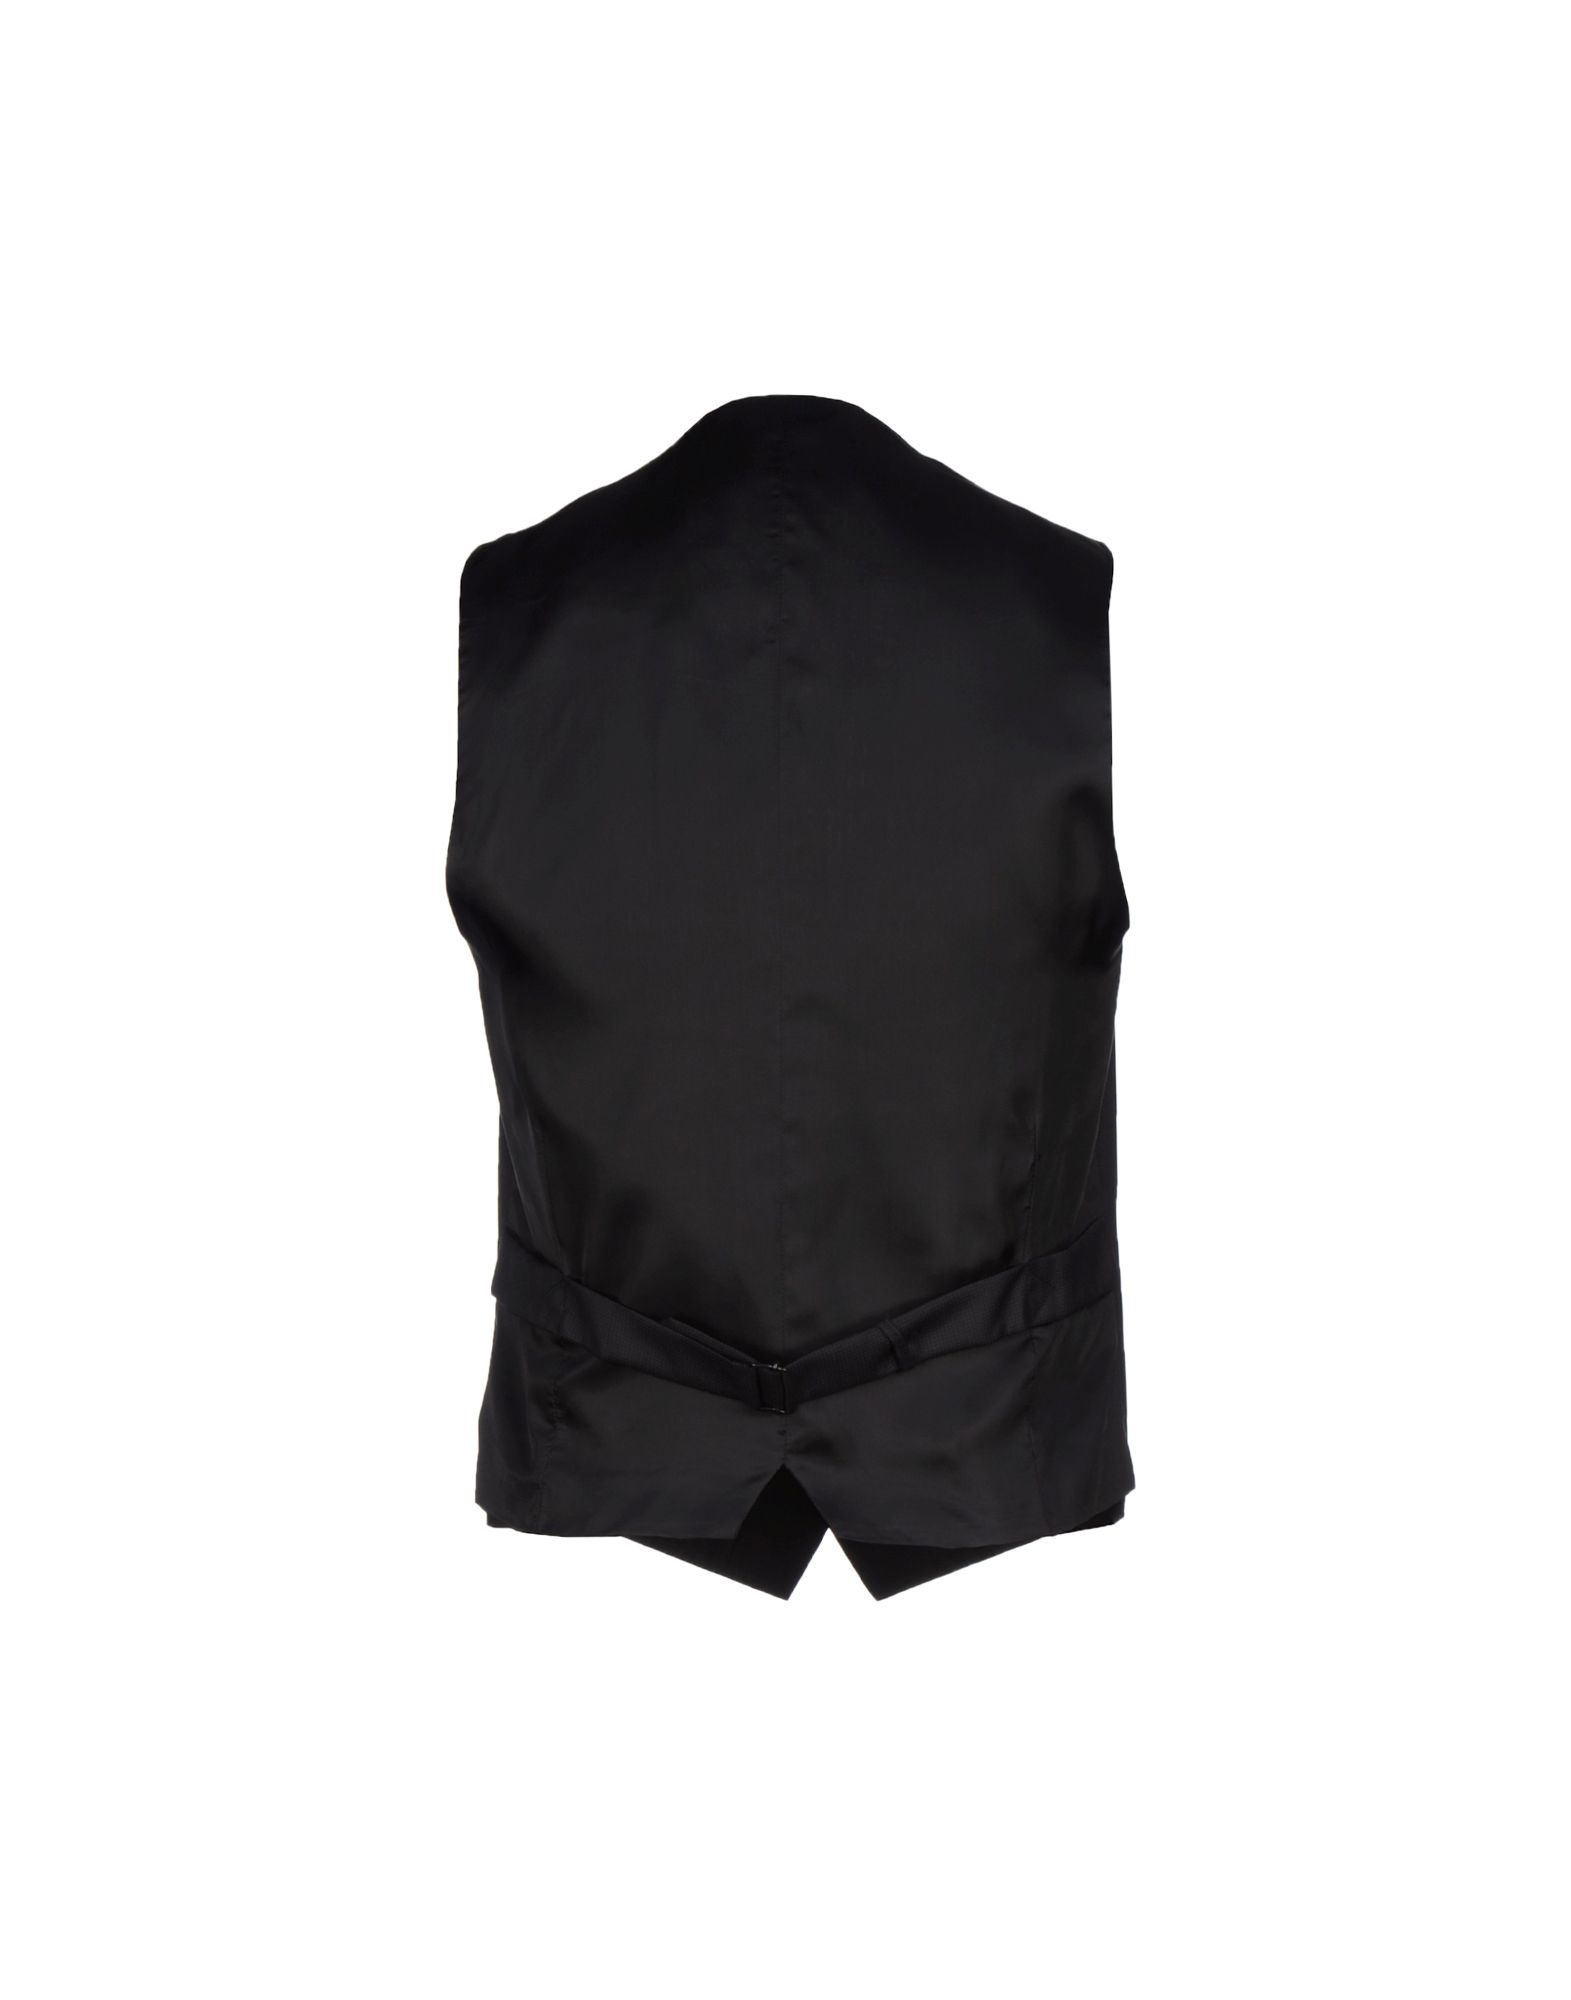 Lyst - Gucci Waistcoat in Black for Men